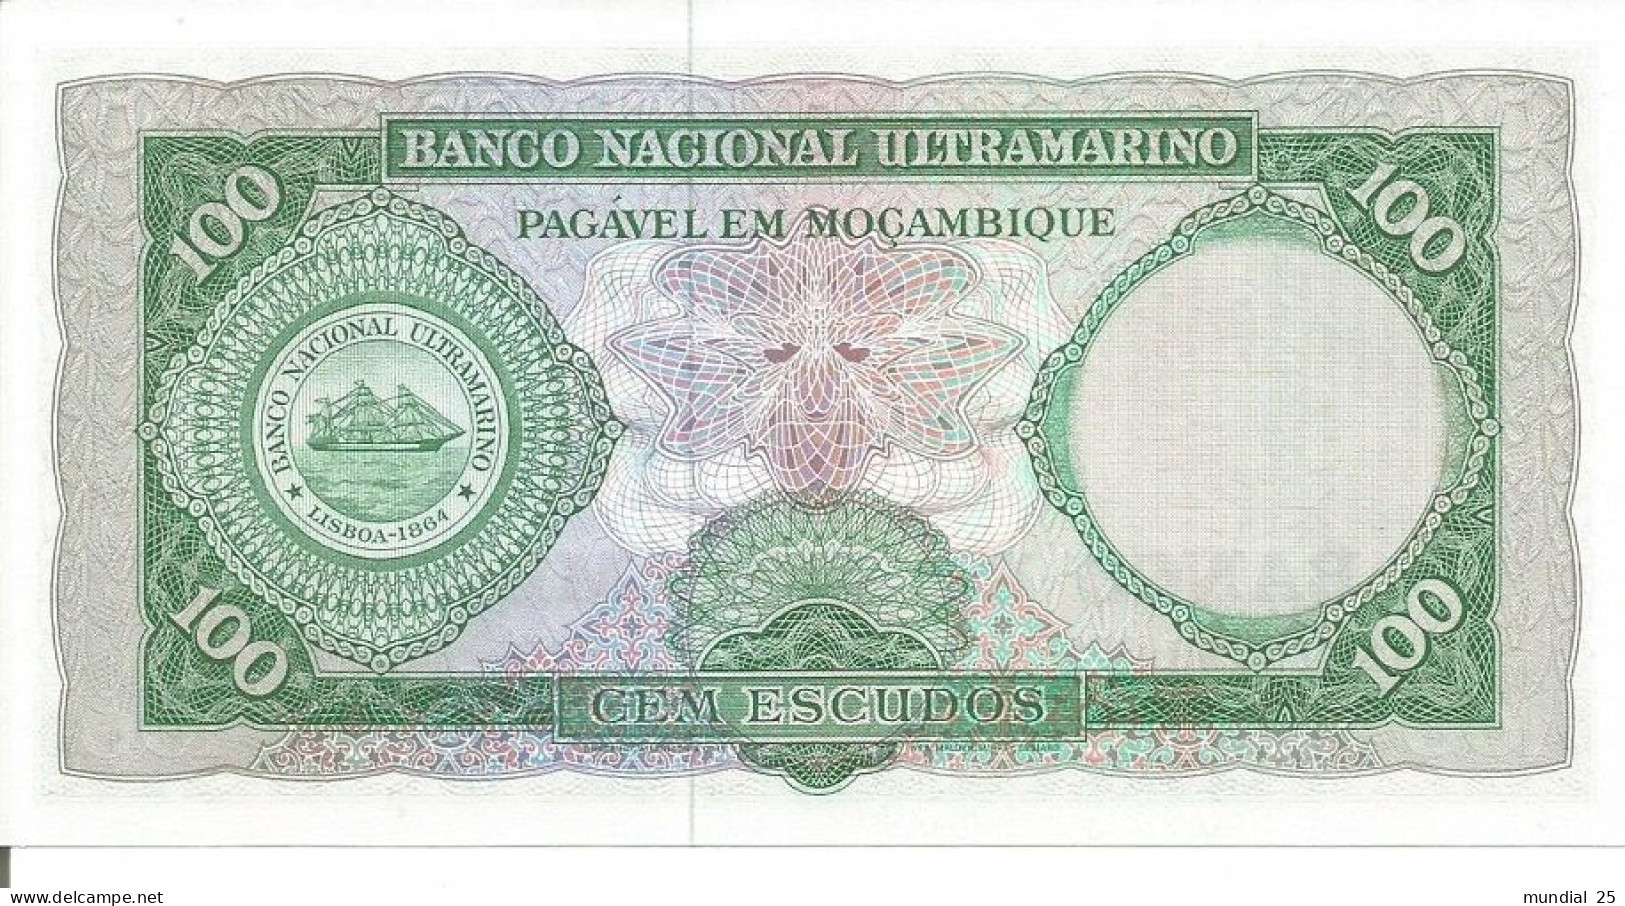 MOZAMBIQUE 100$00 ESCUDOS N/D (1976 - OLD DATE 27/03/1961) - Mozambico